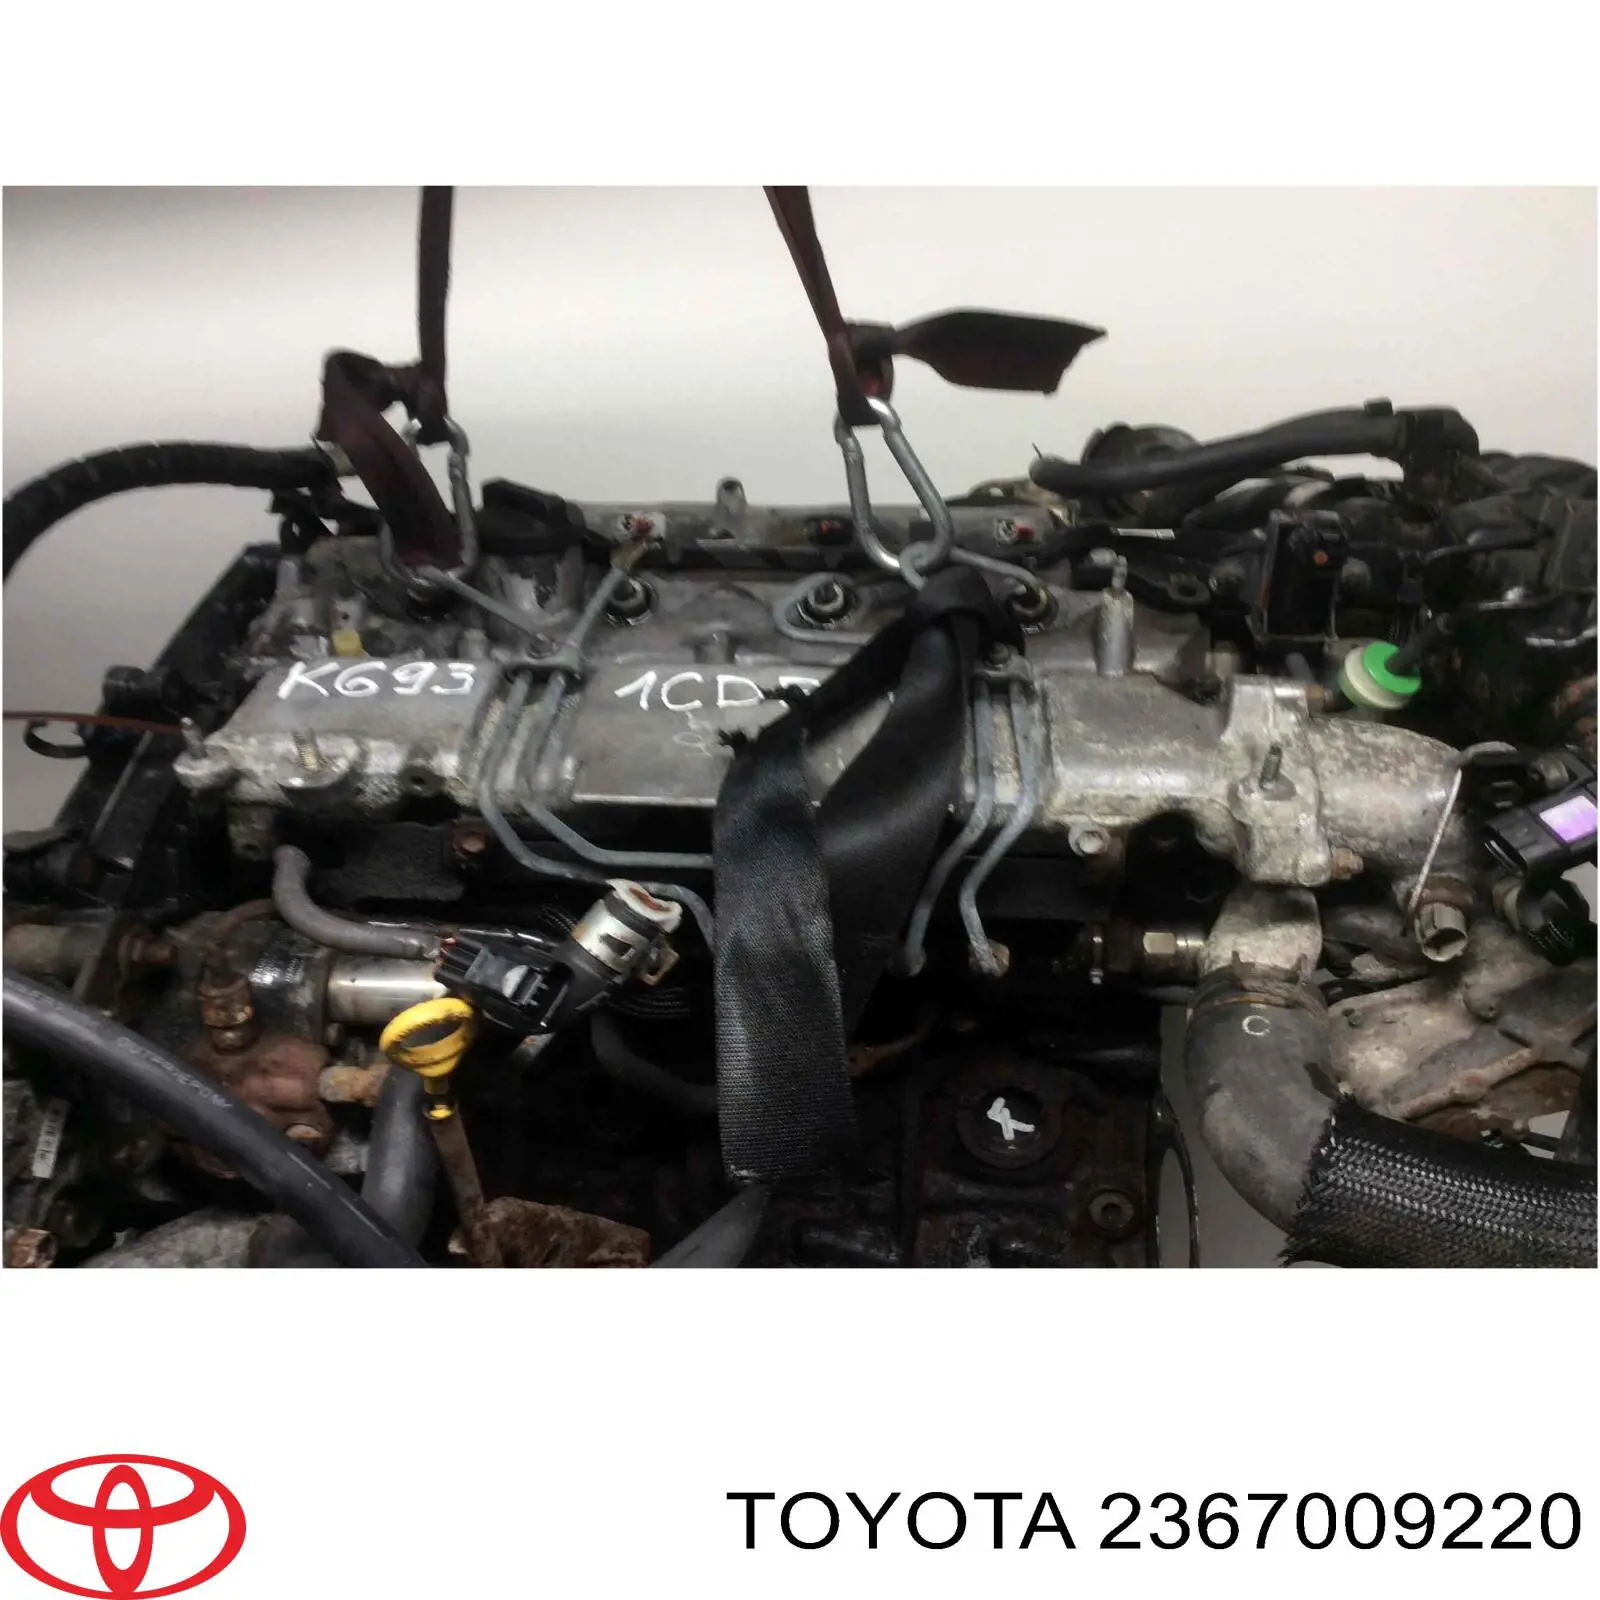 2367009220 Toyota inyector